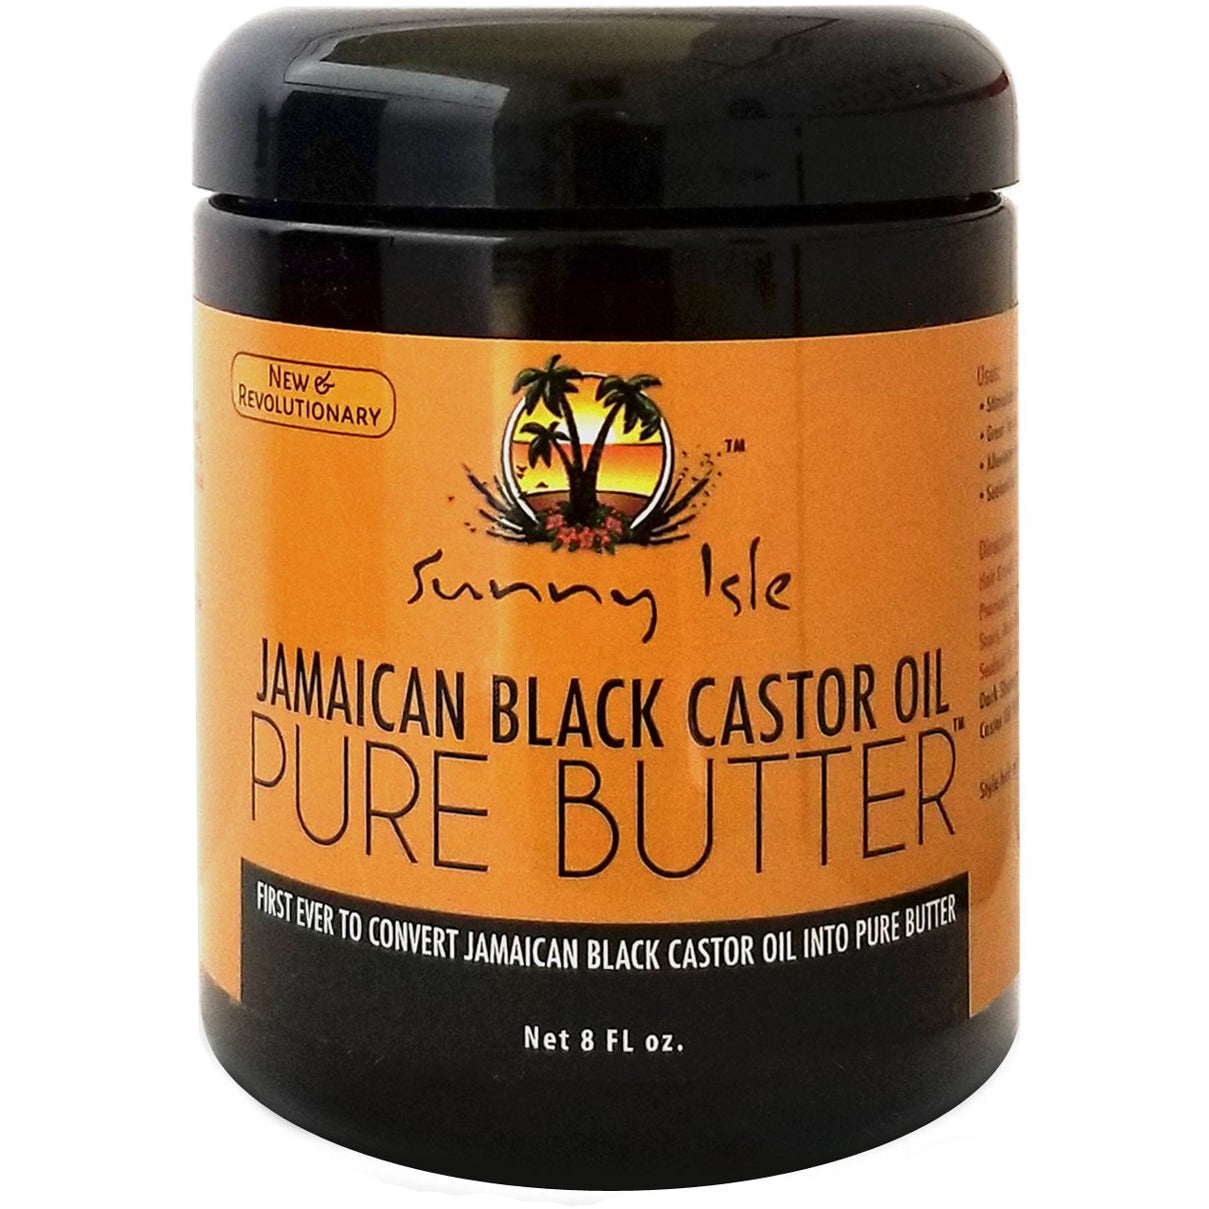 4th Ave Market: Sunny Isle Jamaican Black Castor Oil Pure Butter, Brown, 8 Fluid Ounce